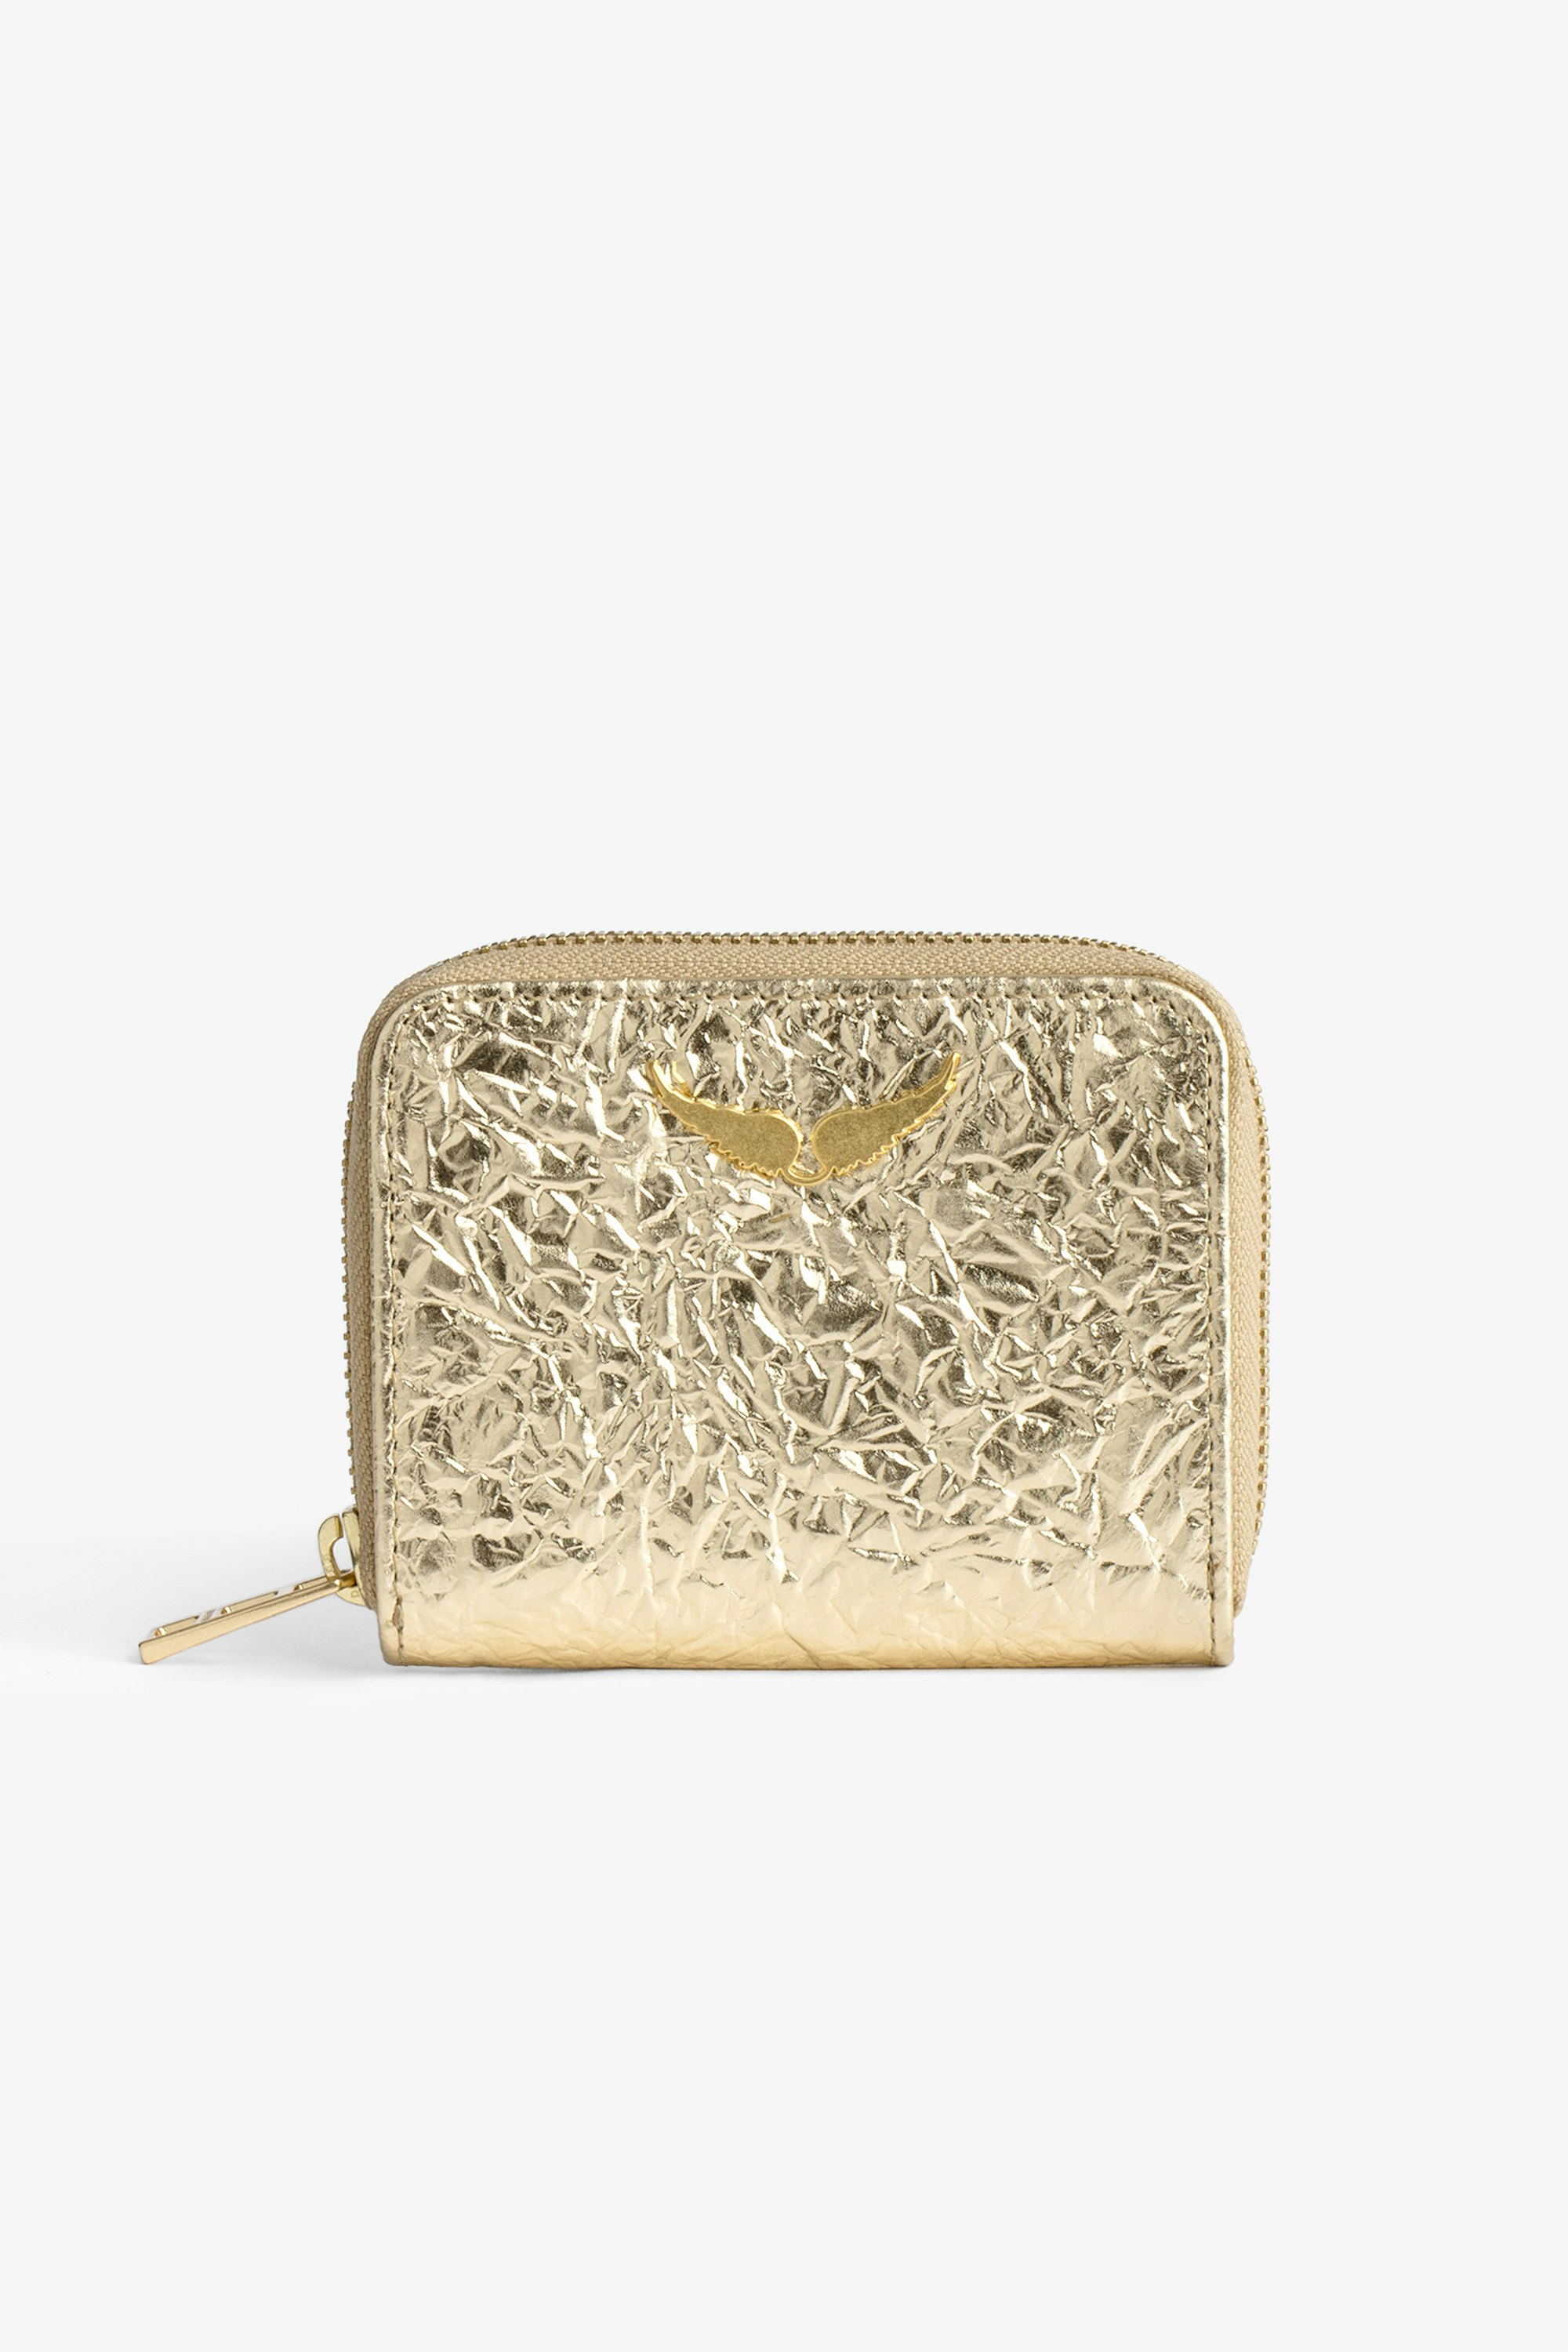 ZV Mini Purse 財布 Women’s metallic gold crinkled leather zipped purse